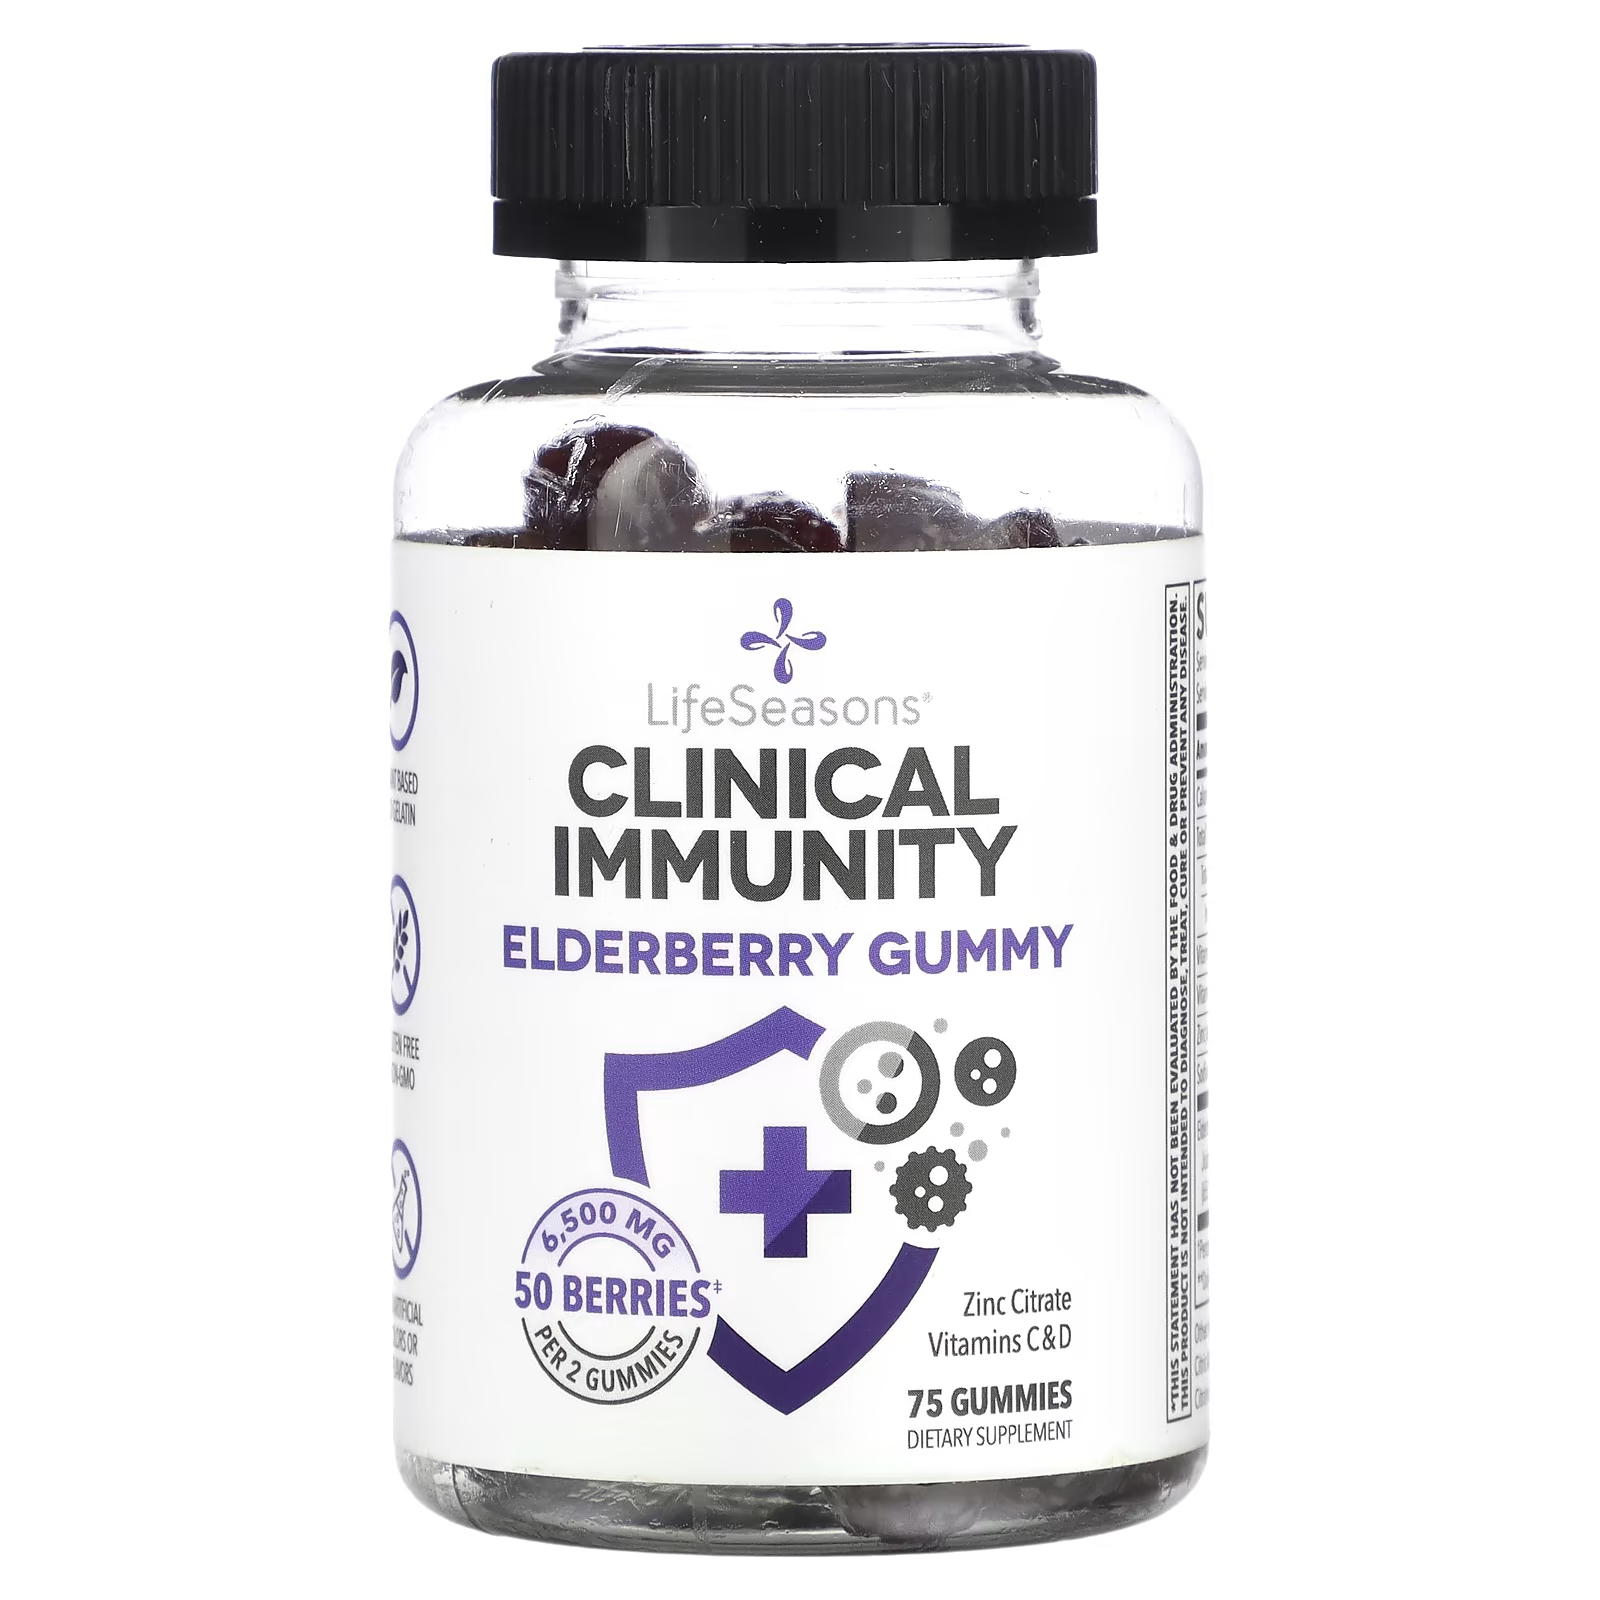 LifeSeasons Clinical Immunity Elderberry Gummy 6500 мг 75 жевательных таблеток (3250 мг на жевательную конфету) olly active immunity elderberry berry brave 45 жевательных таблеток